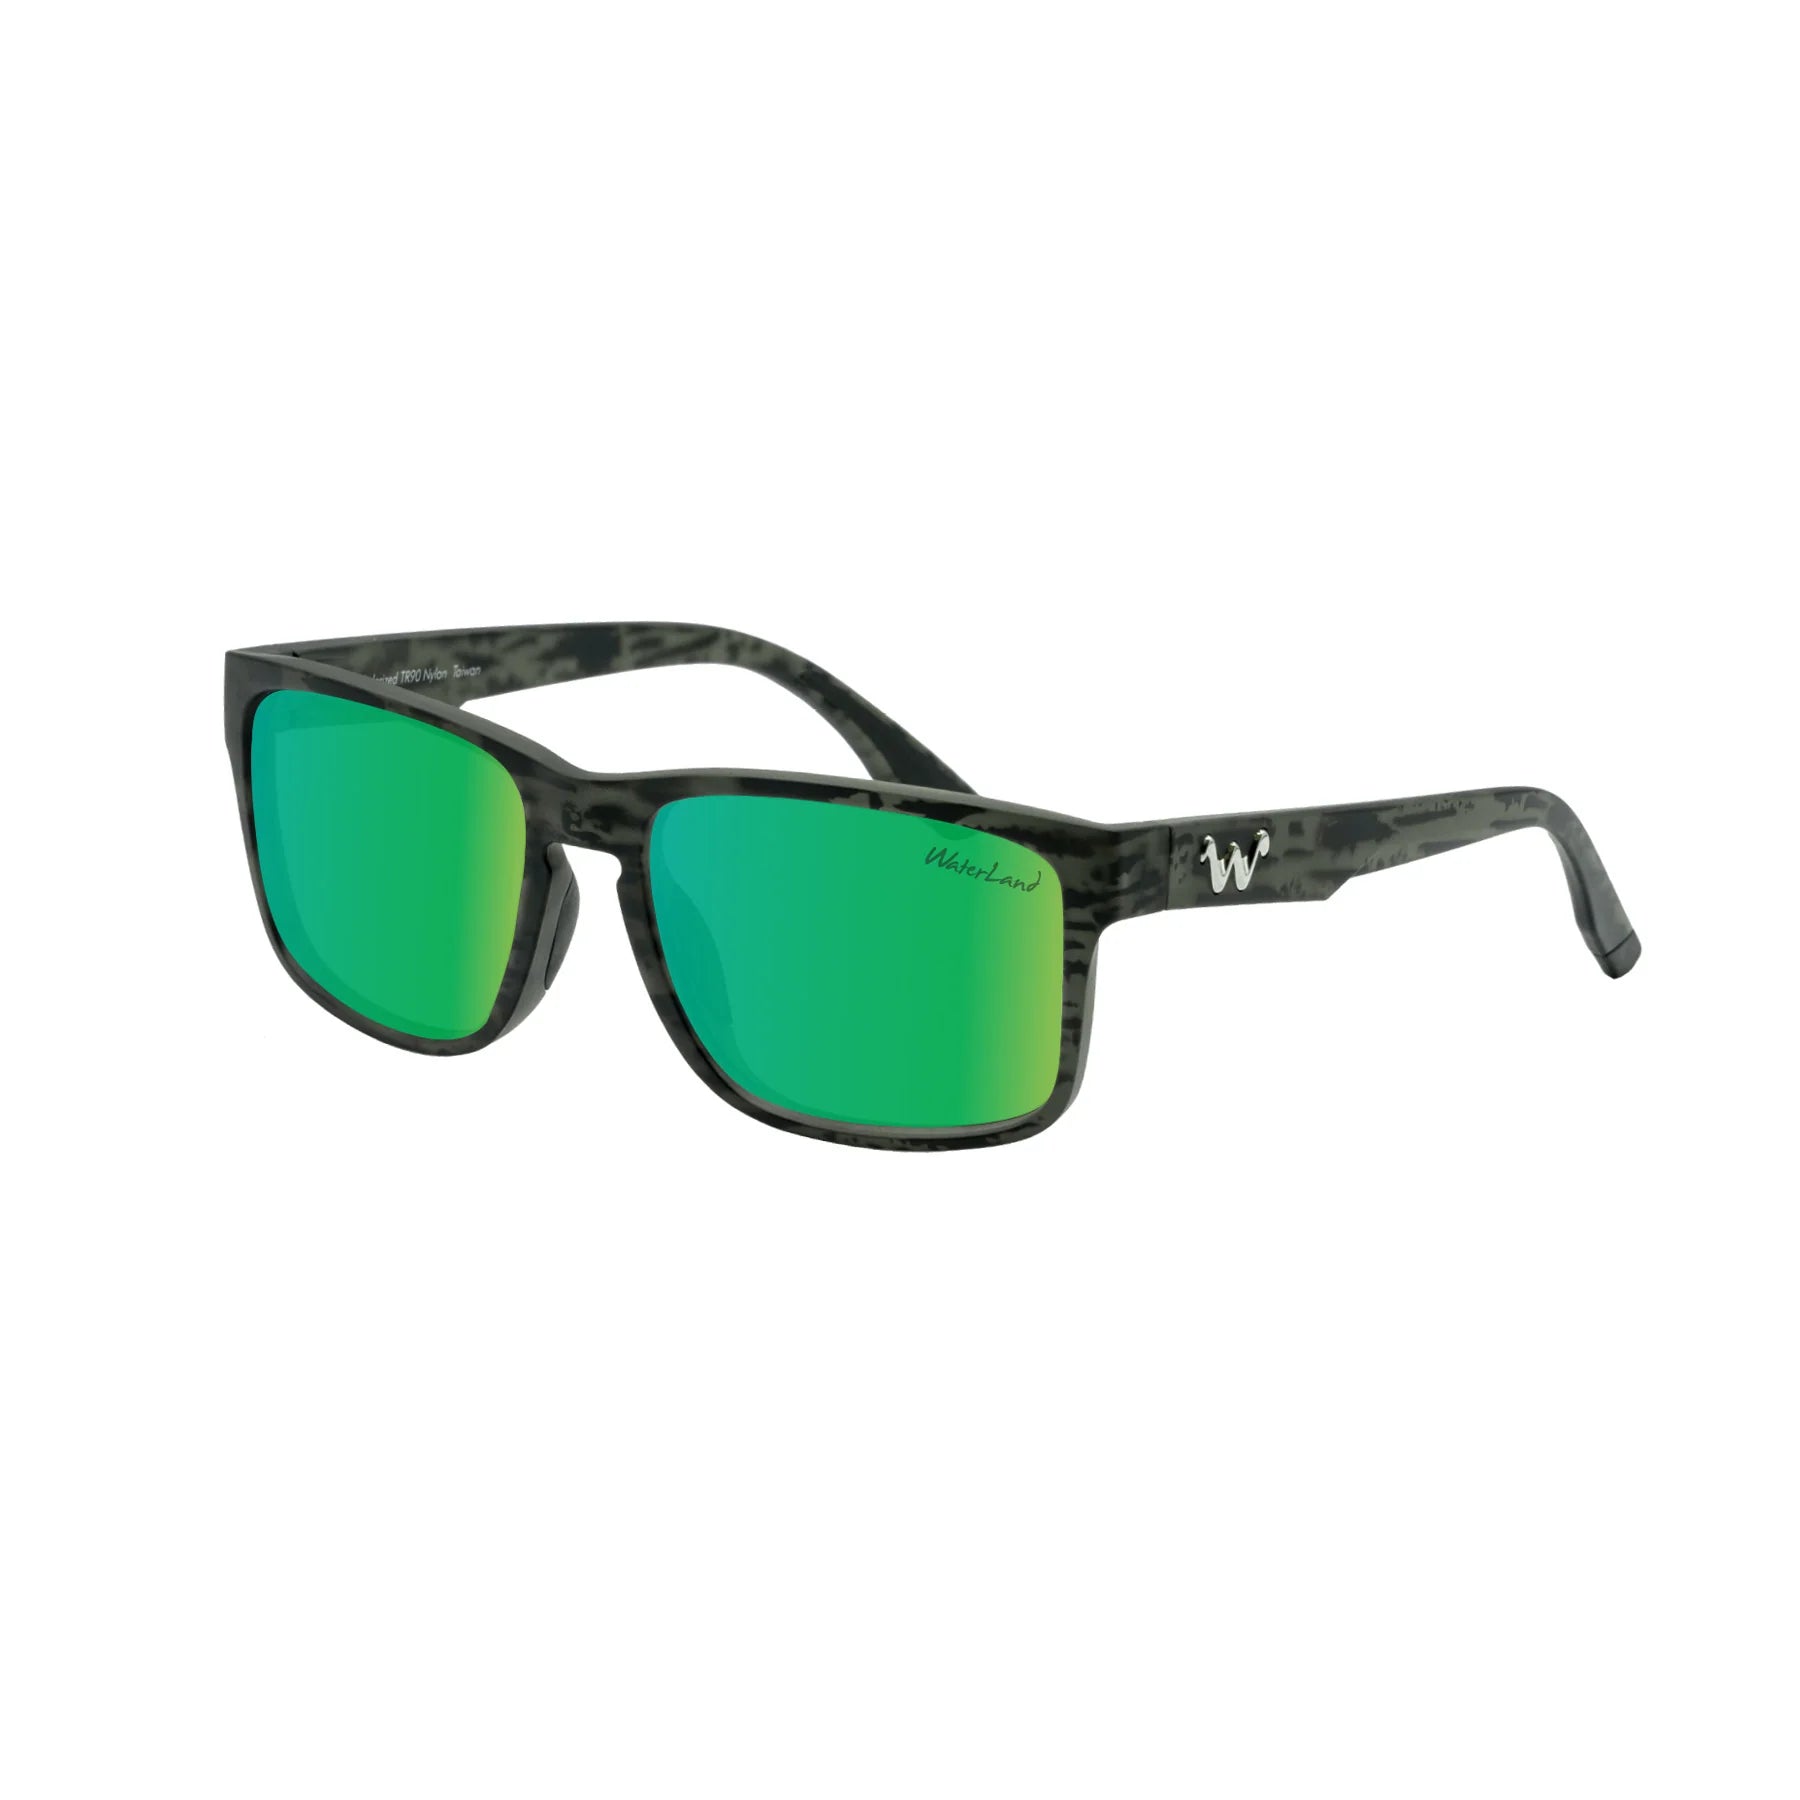 Waterland "Sobro" Sunglasses